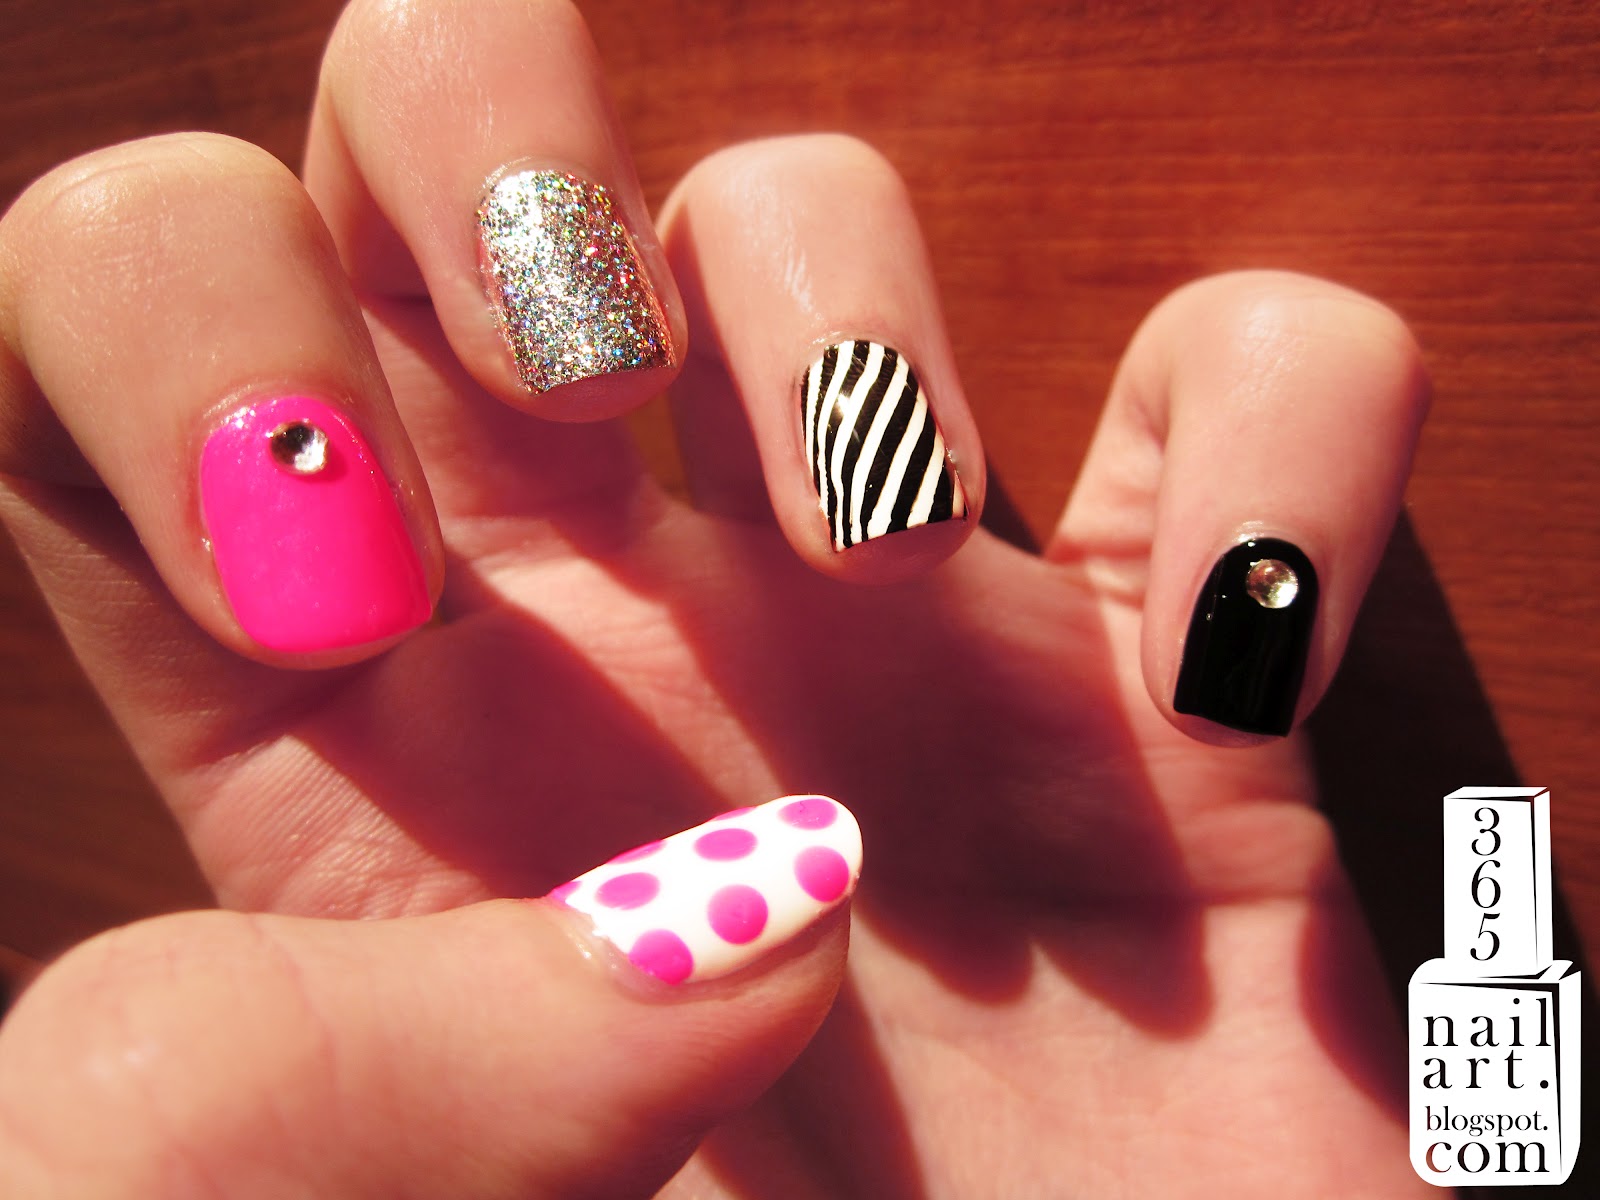 3. Contrasting nail polish - wide 6